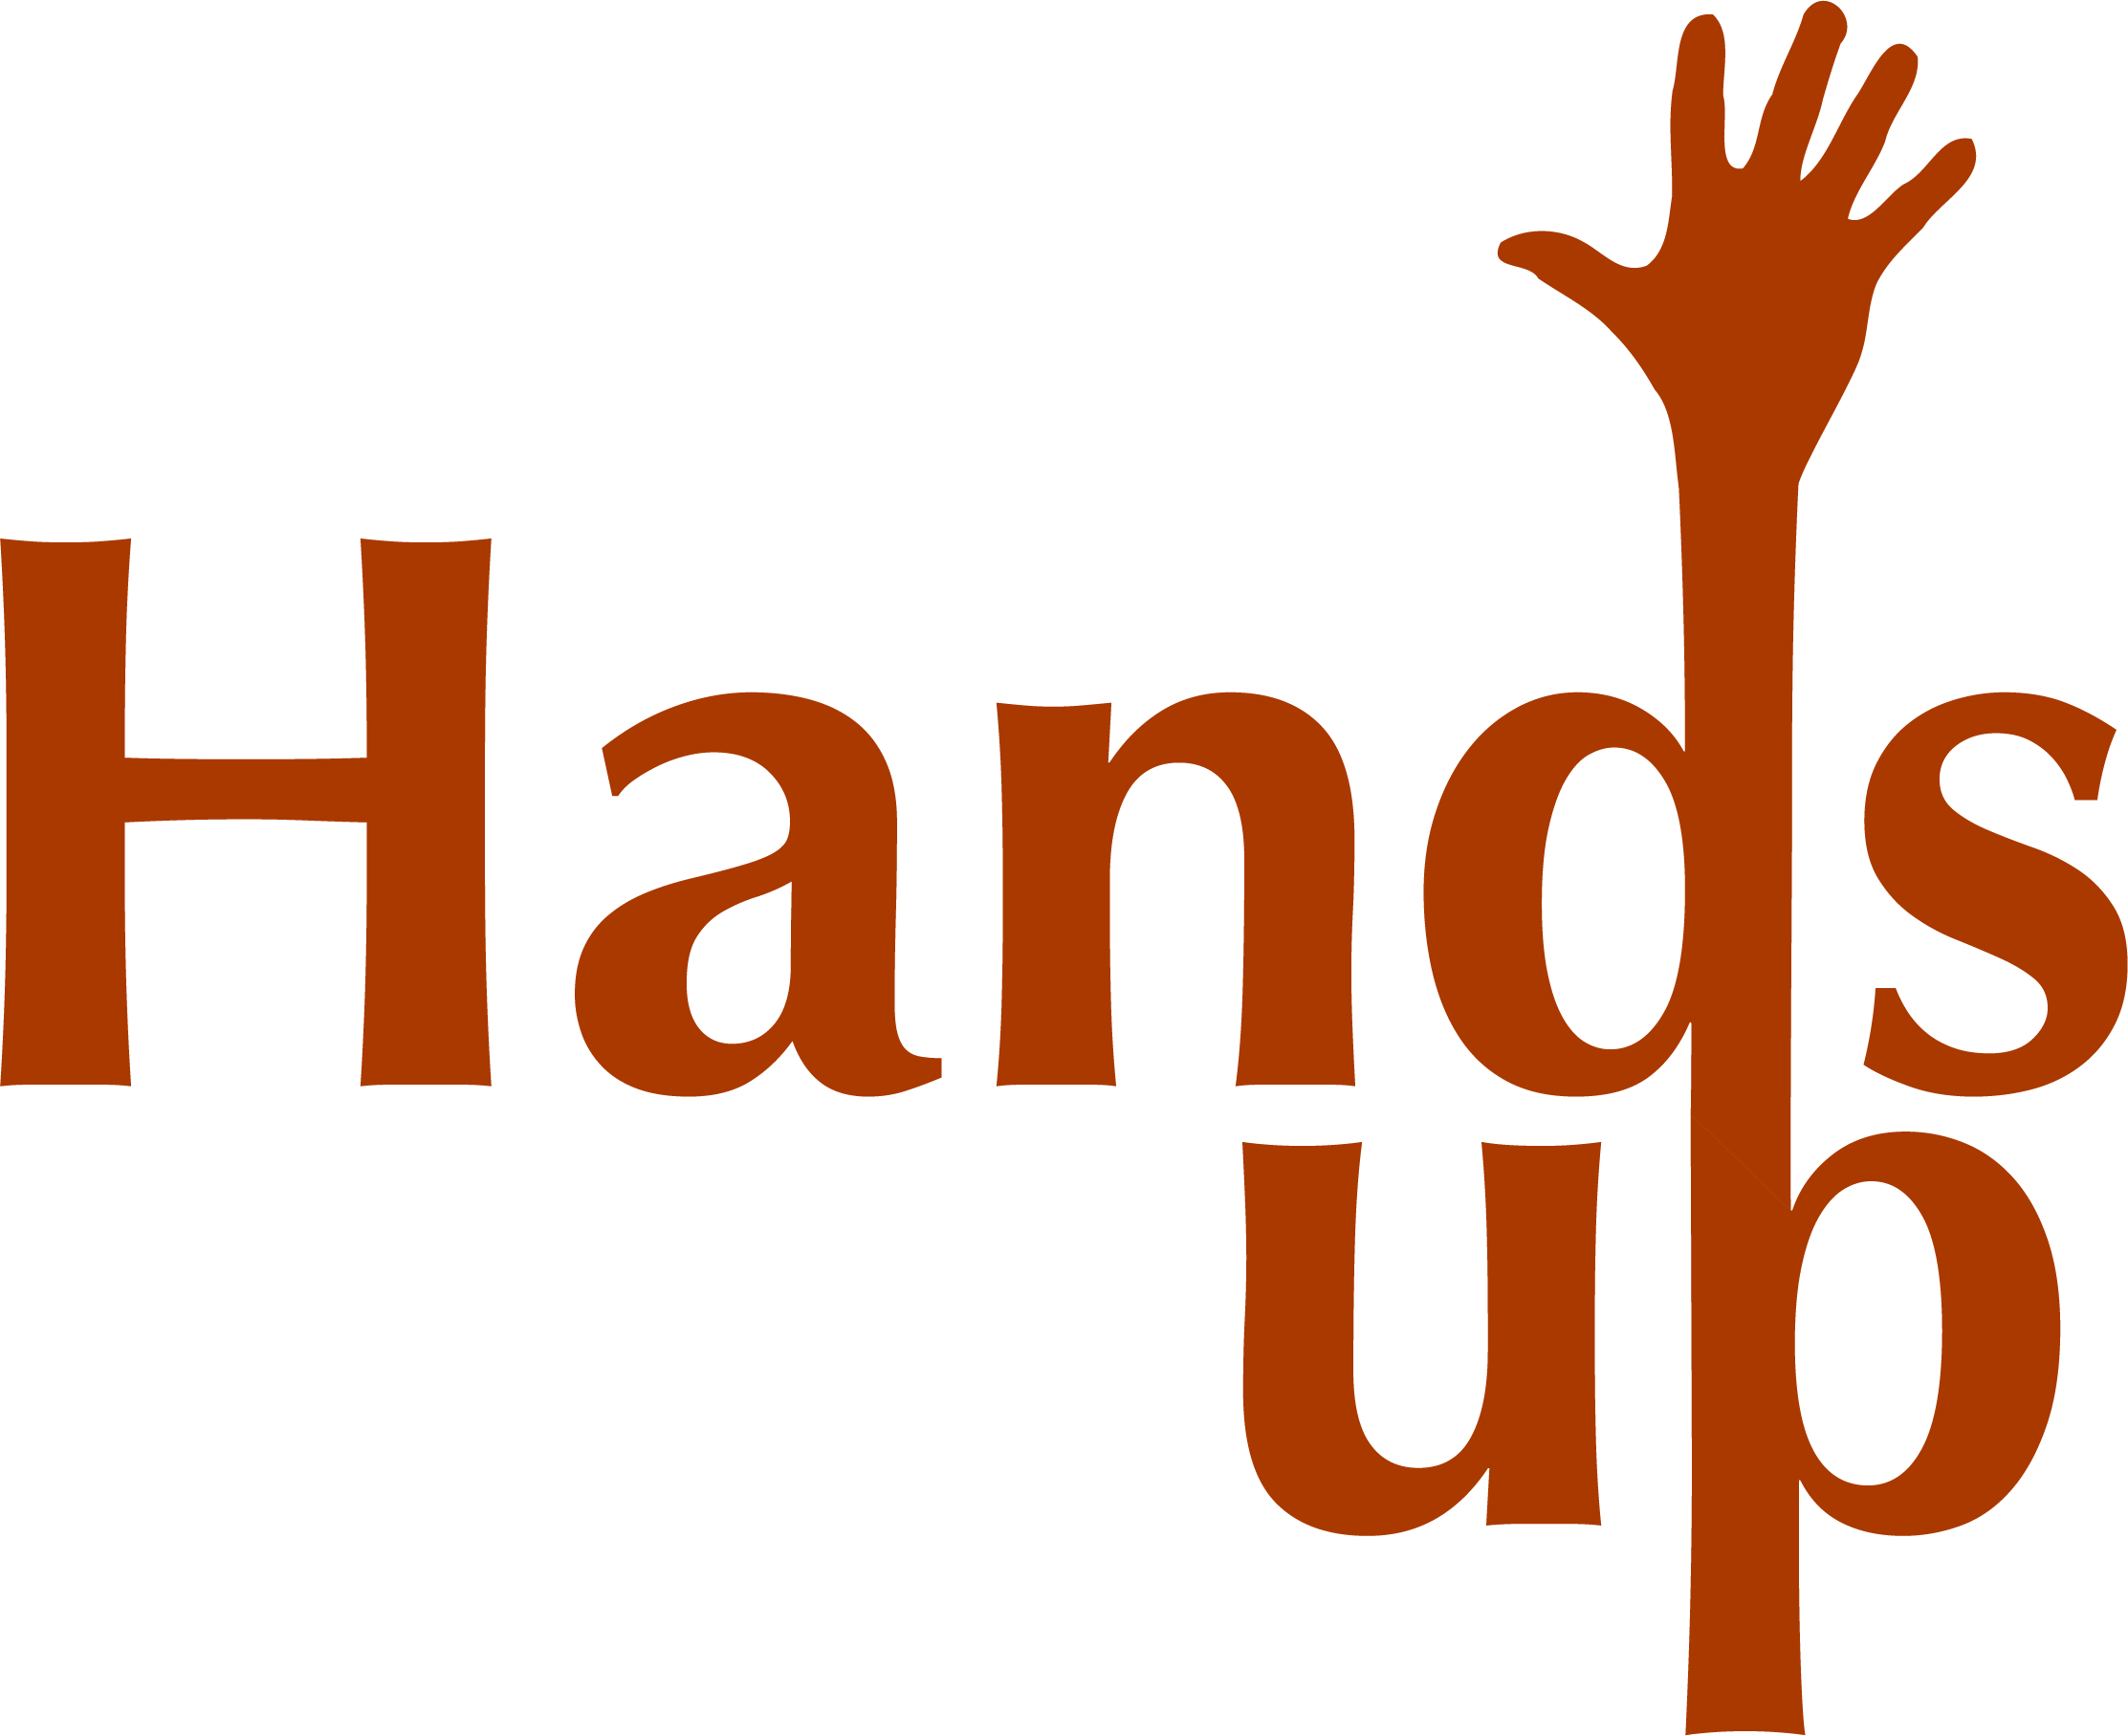 Hands Up logo